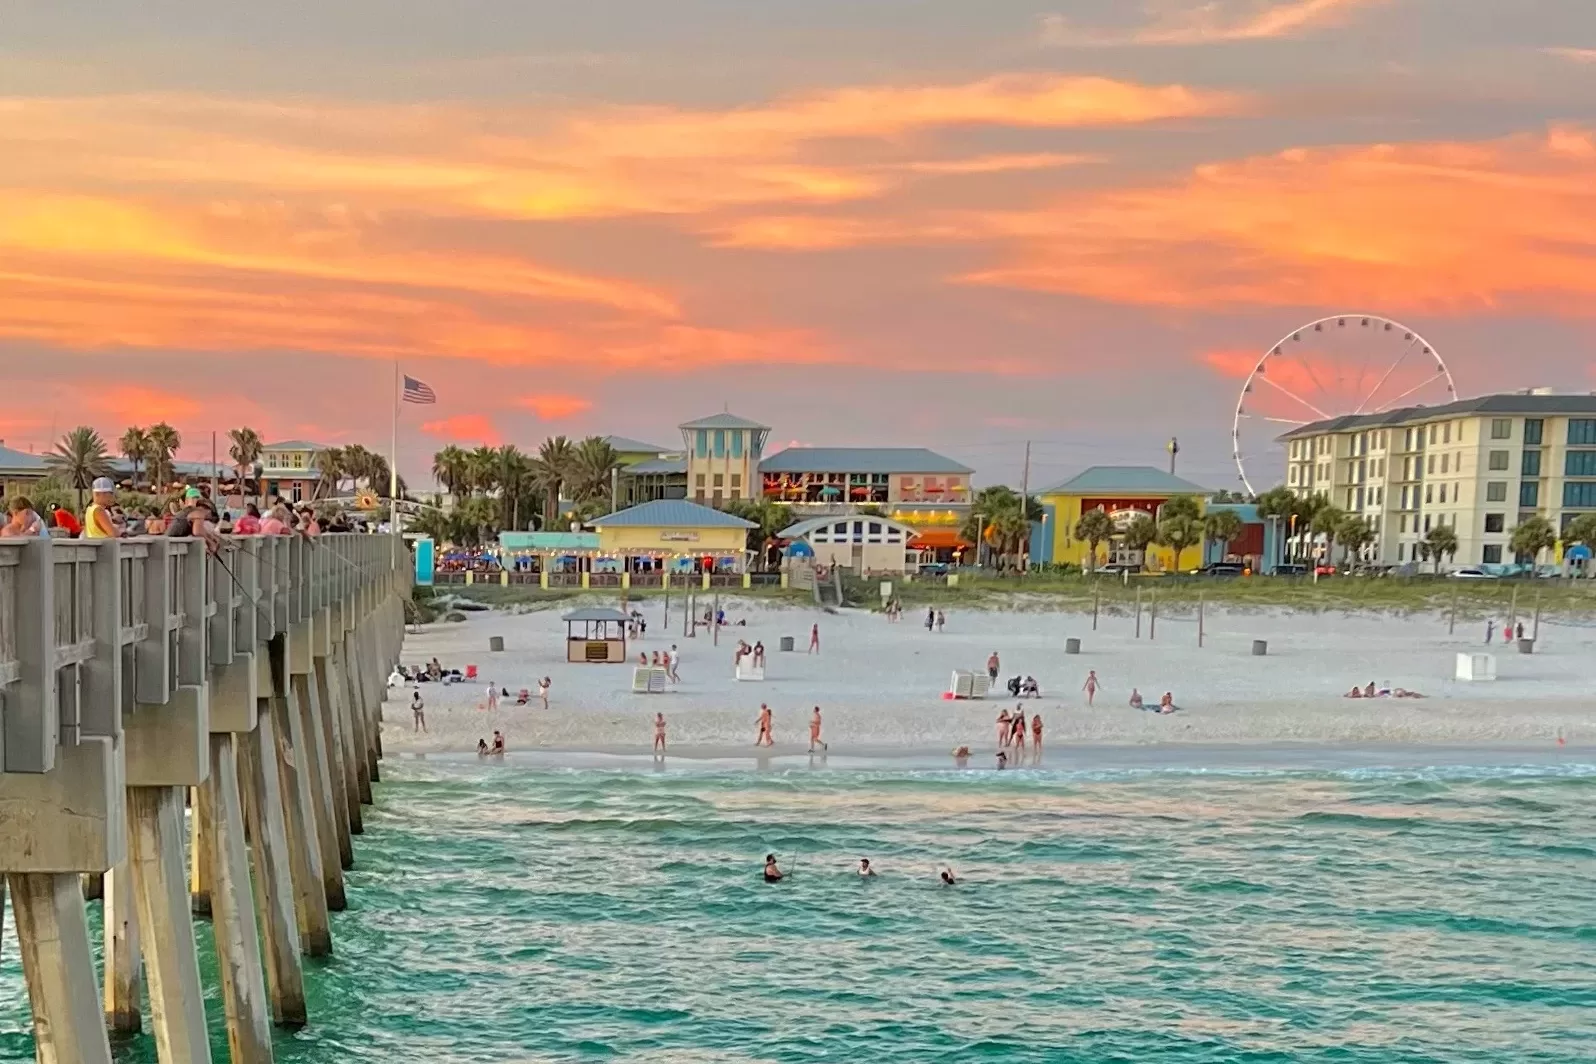 Panama City Beach, Florida: A Sunny Balance of Resident and